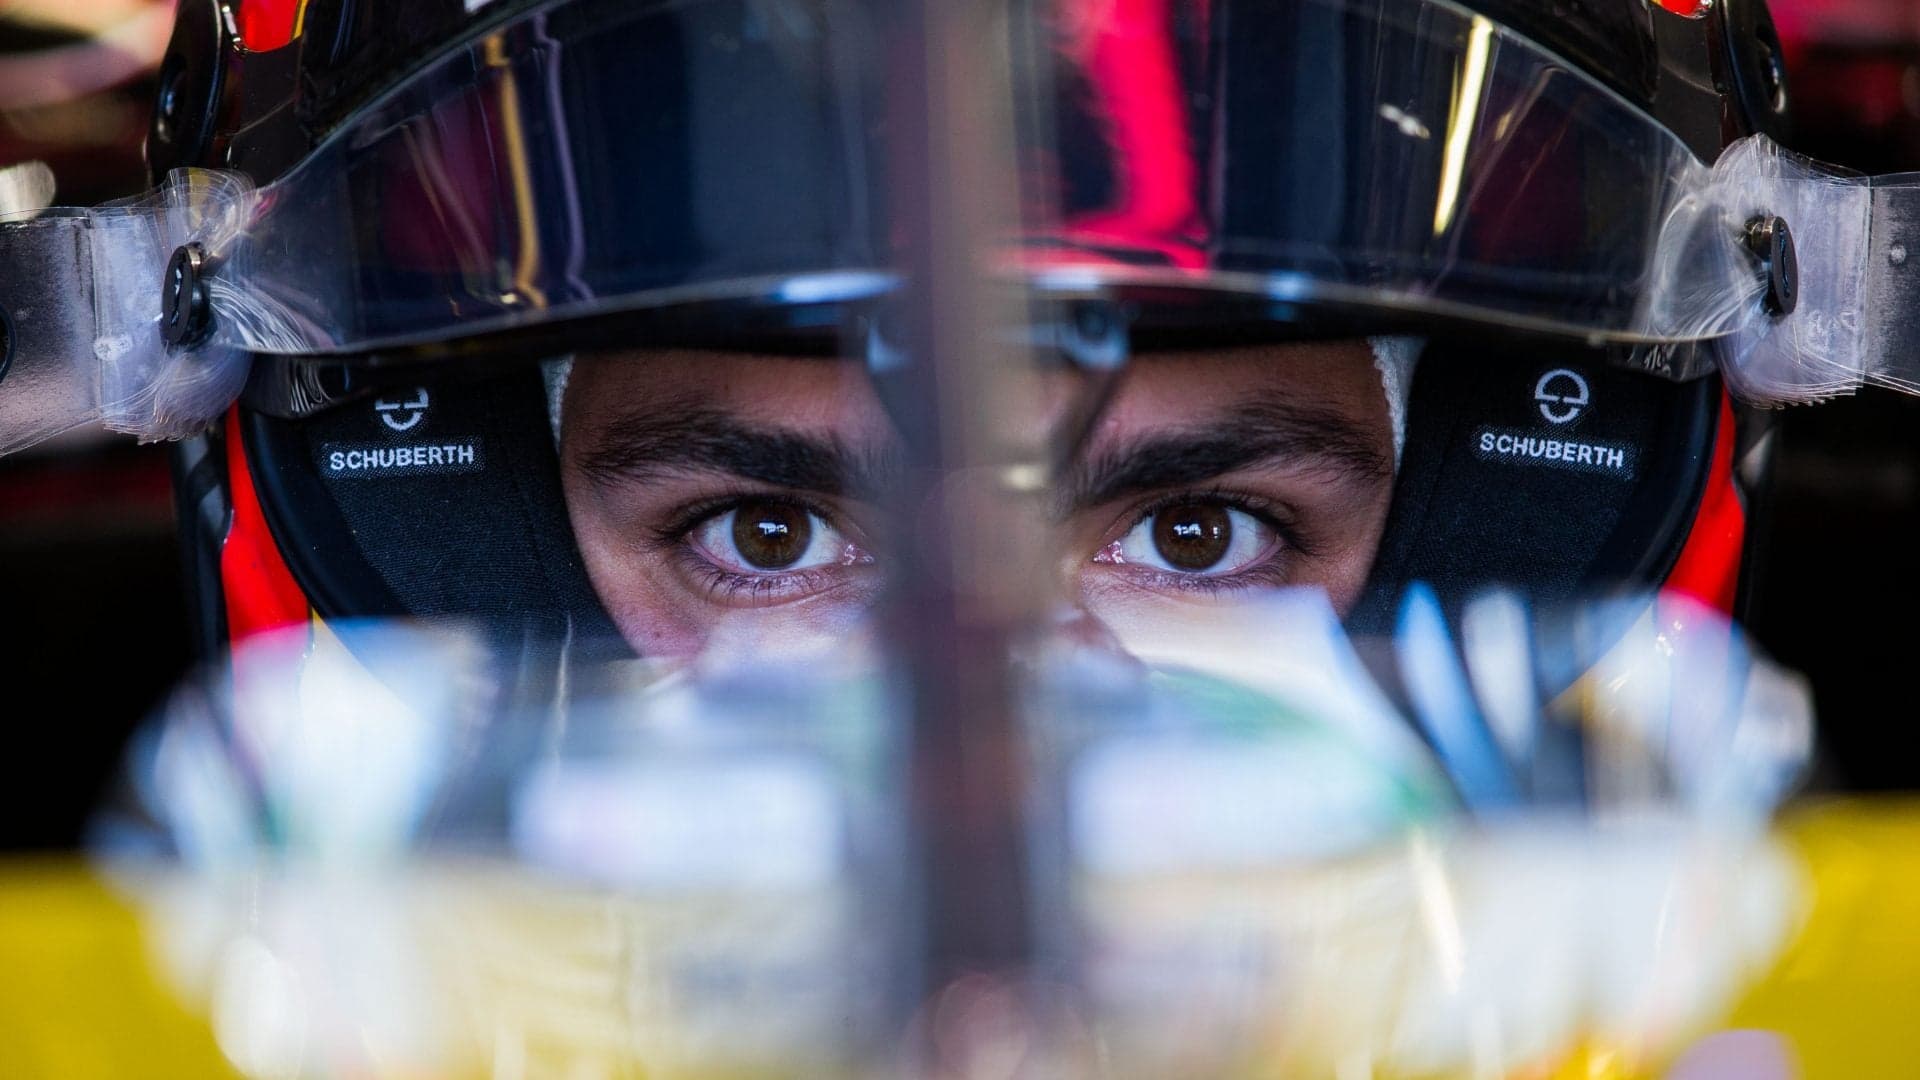 Report: Carlos Sainz Jr. to McLaren for 2019 Formula 1 Season